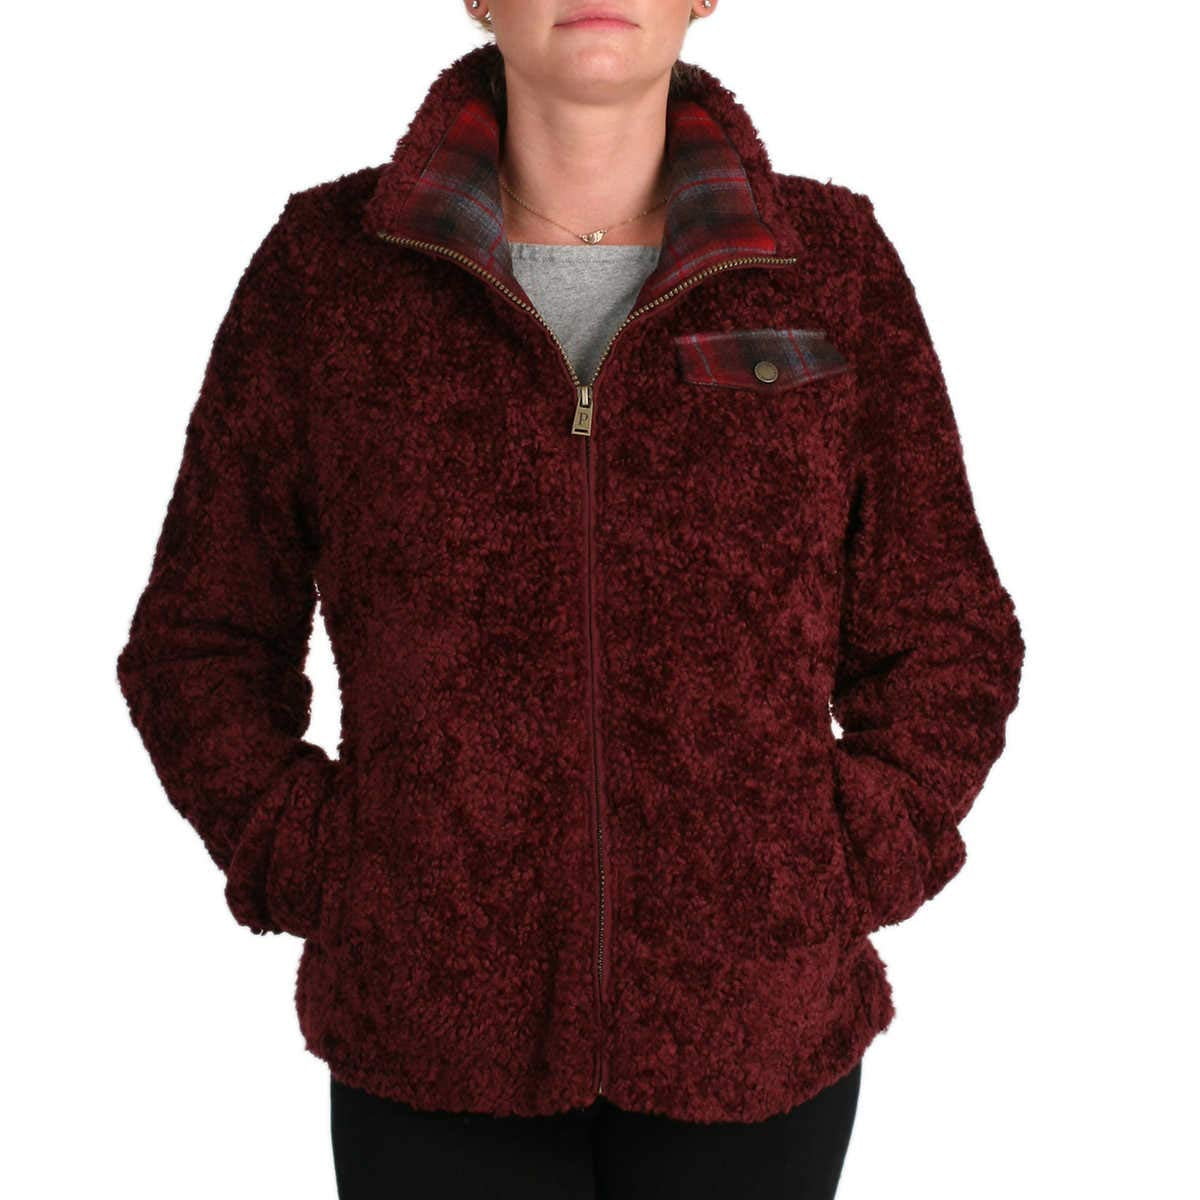 High-Quality Women's Jackets & Coats, Pendleton